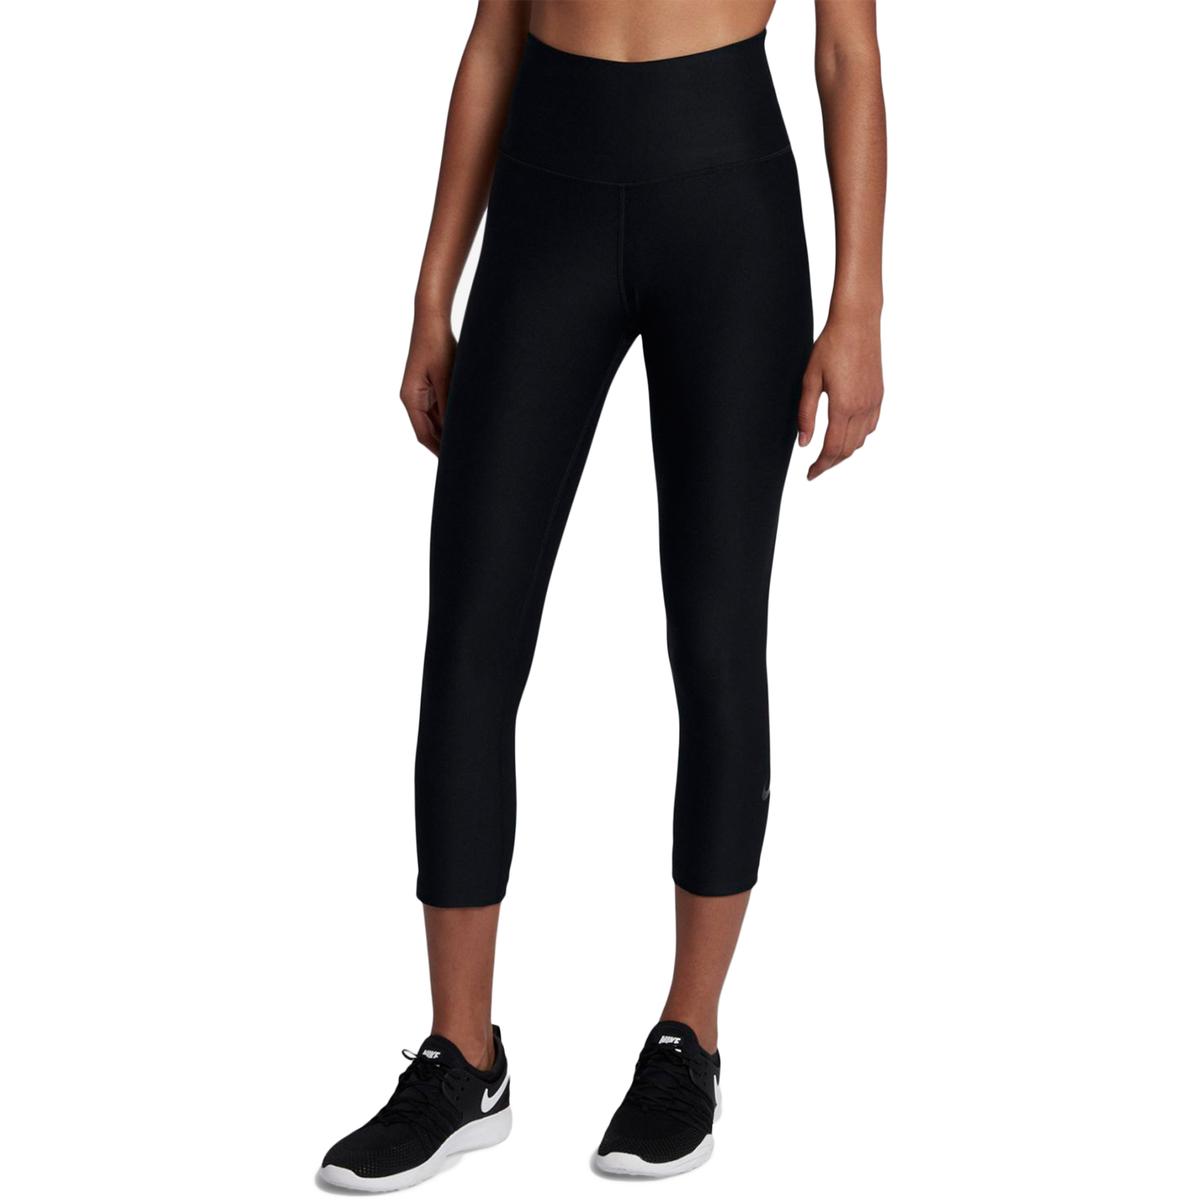 Nike Womens Black Yoga Running Workout Capri Pants Athletic XS BHFO ...